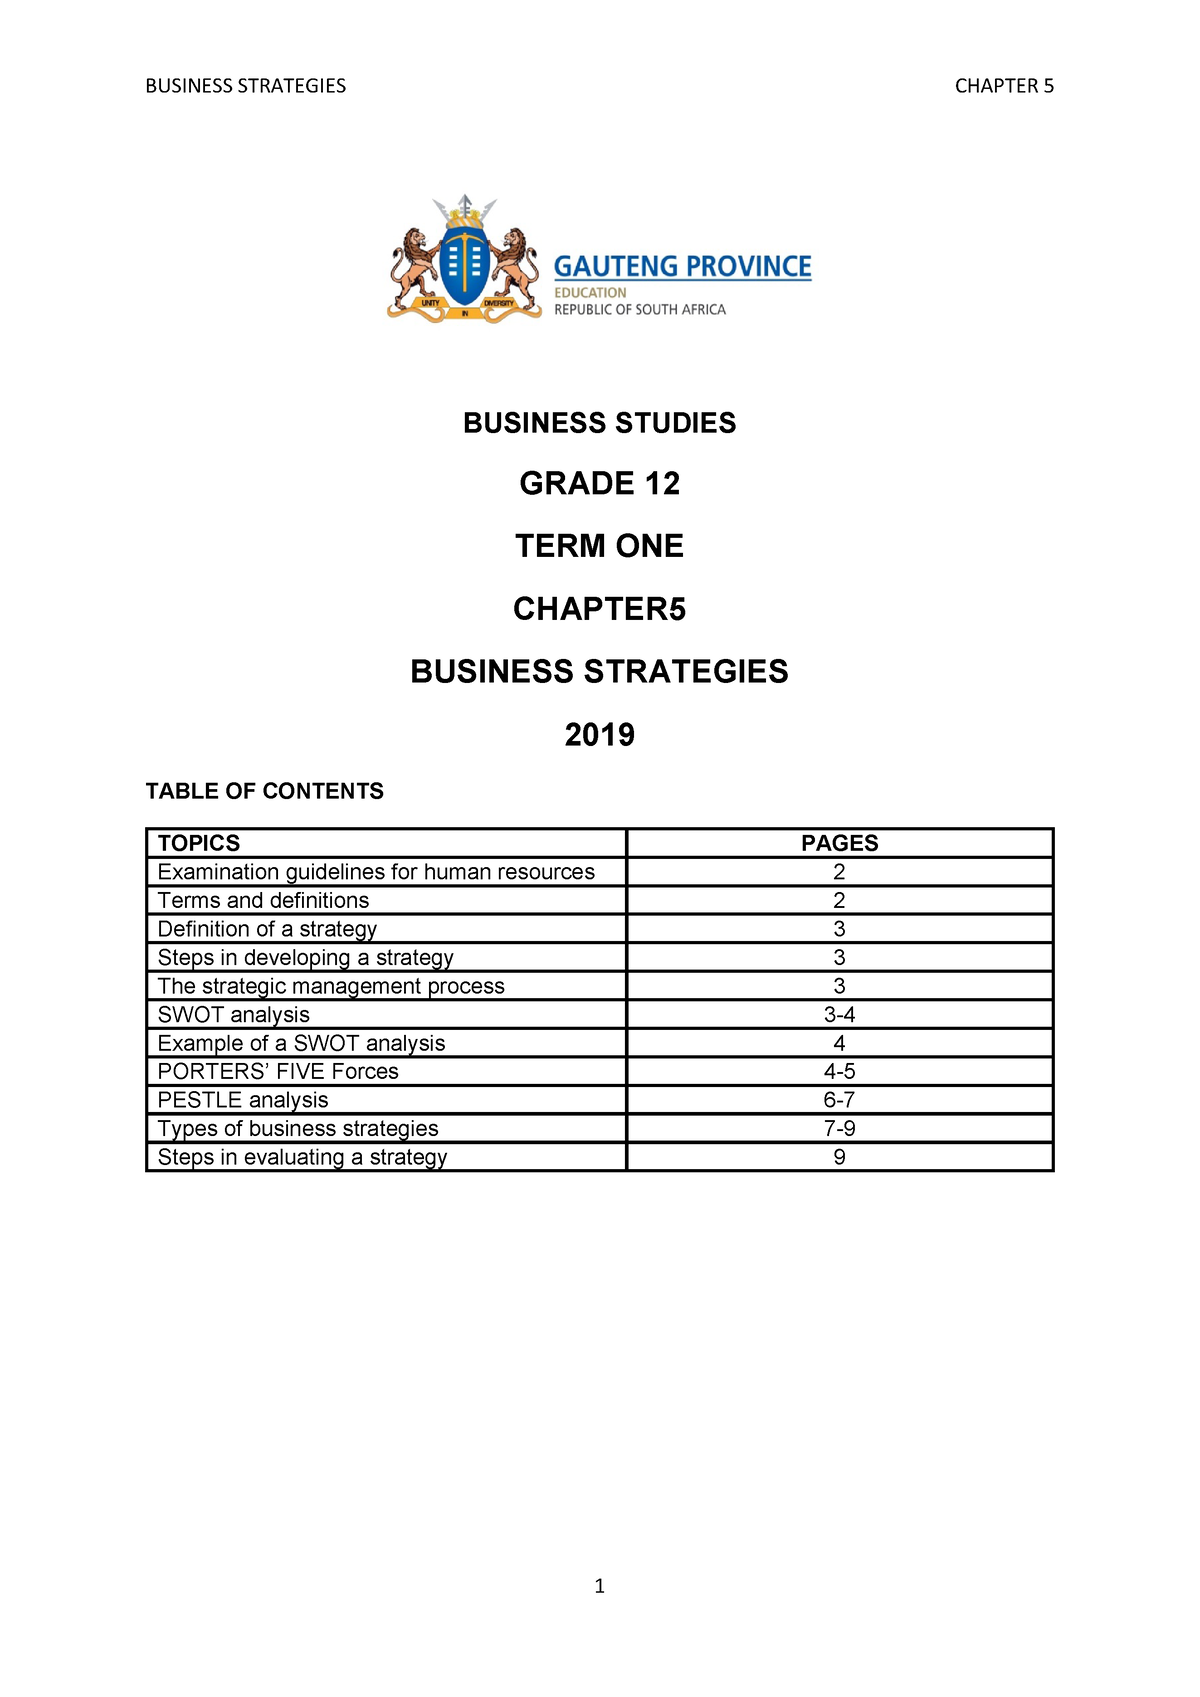 business studies grade 12 business strategies essay